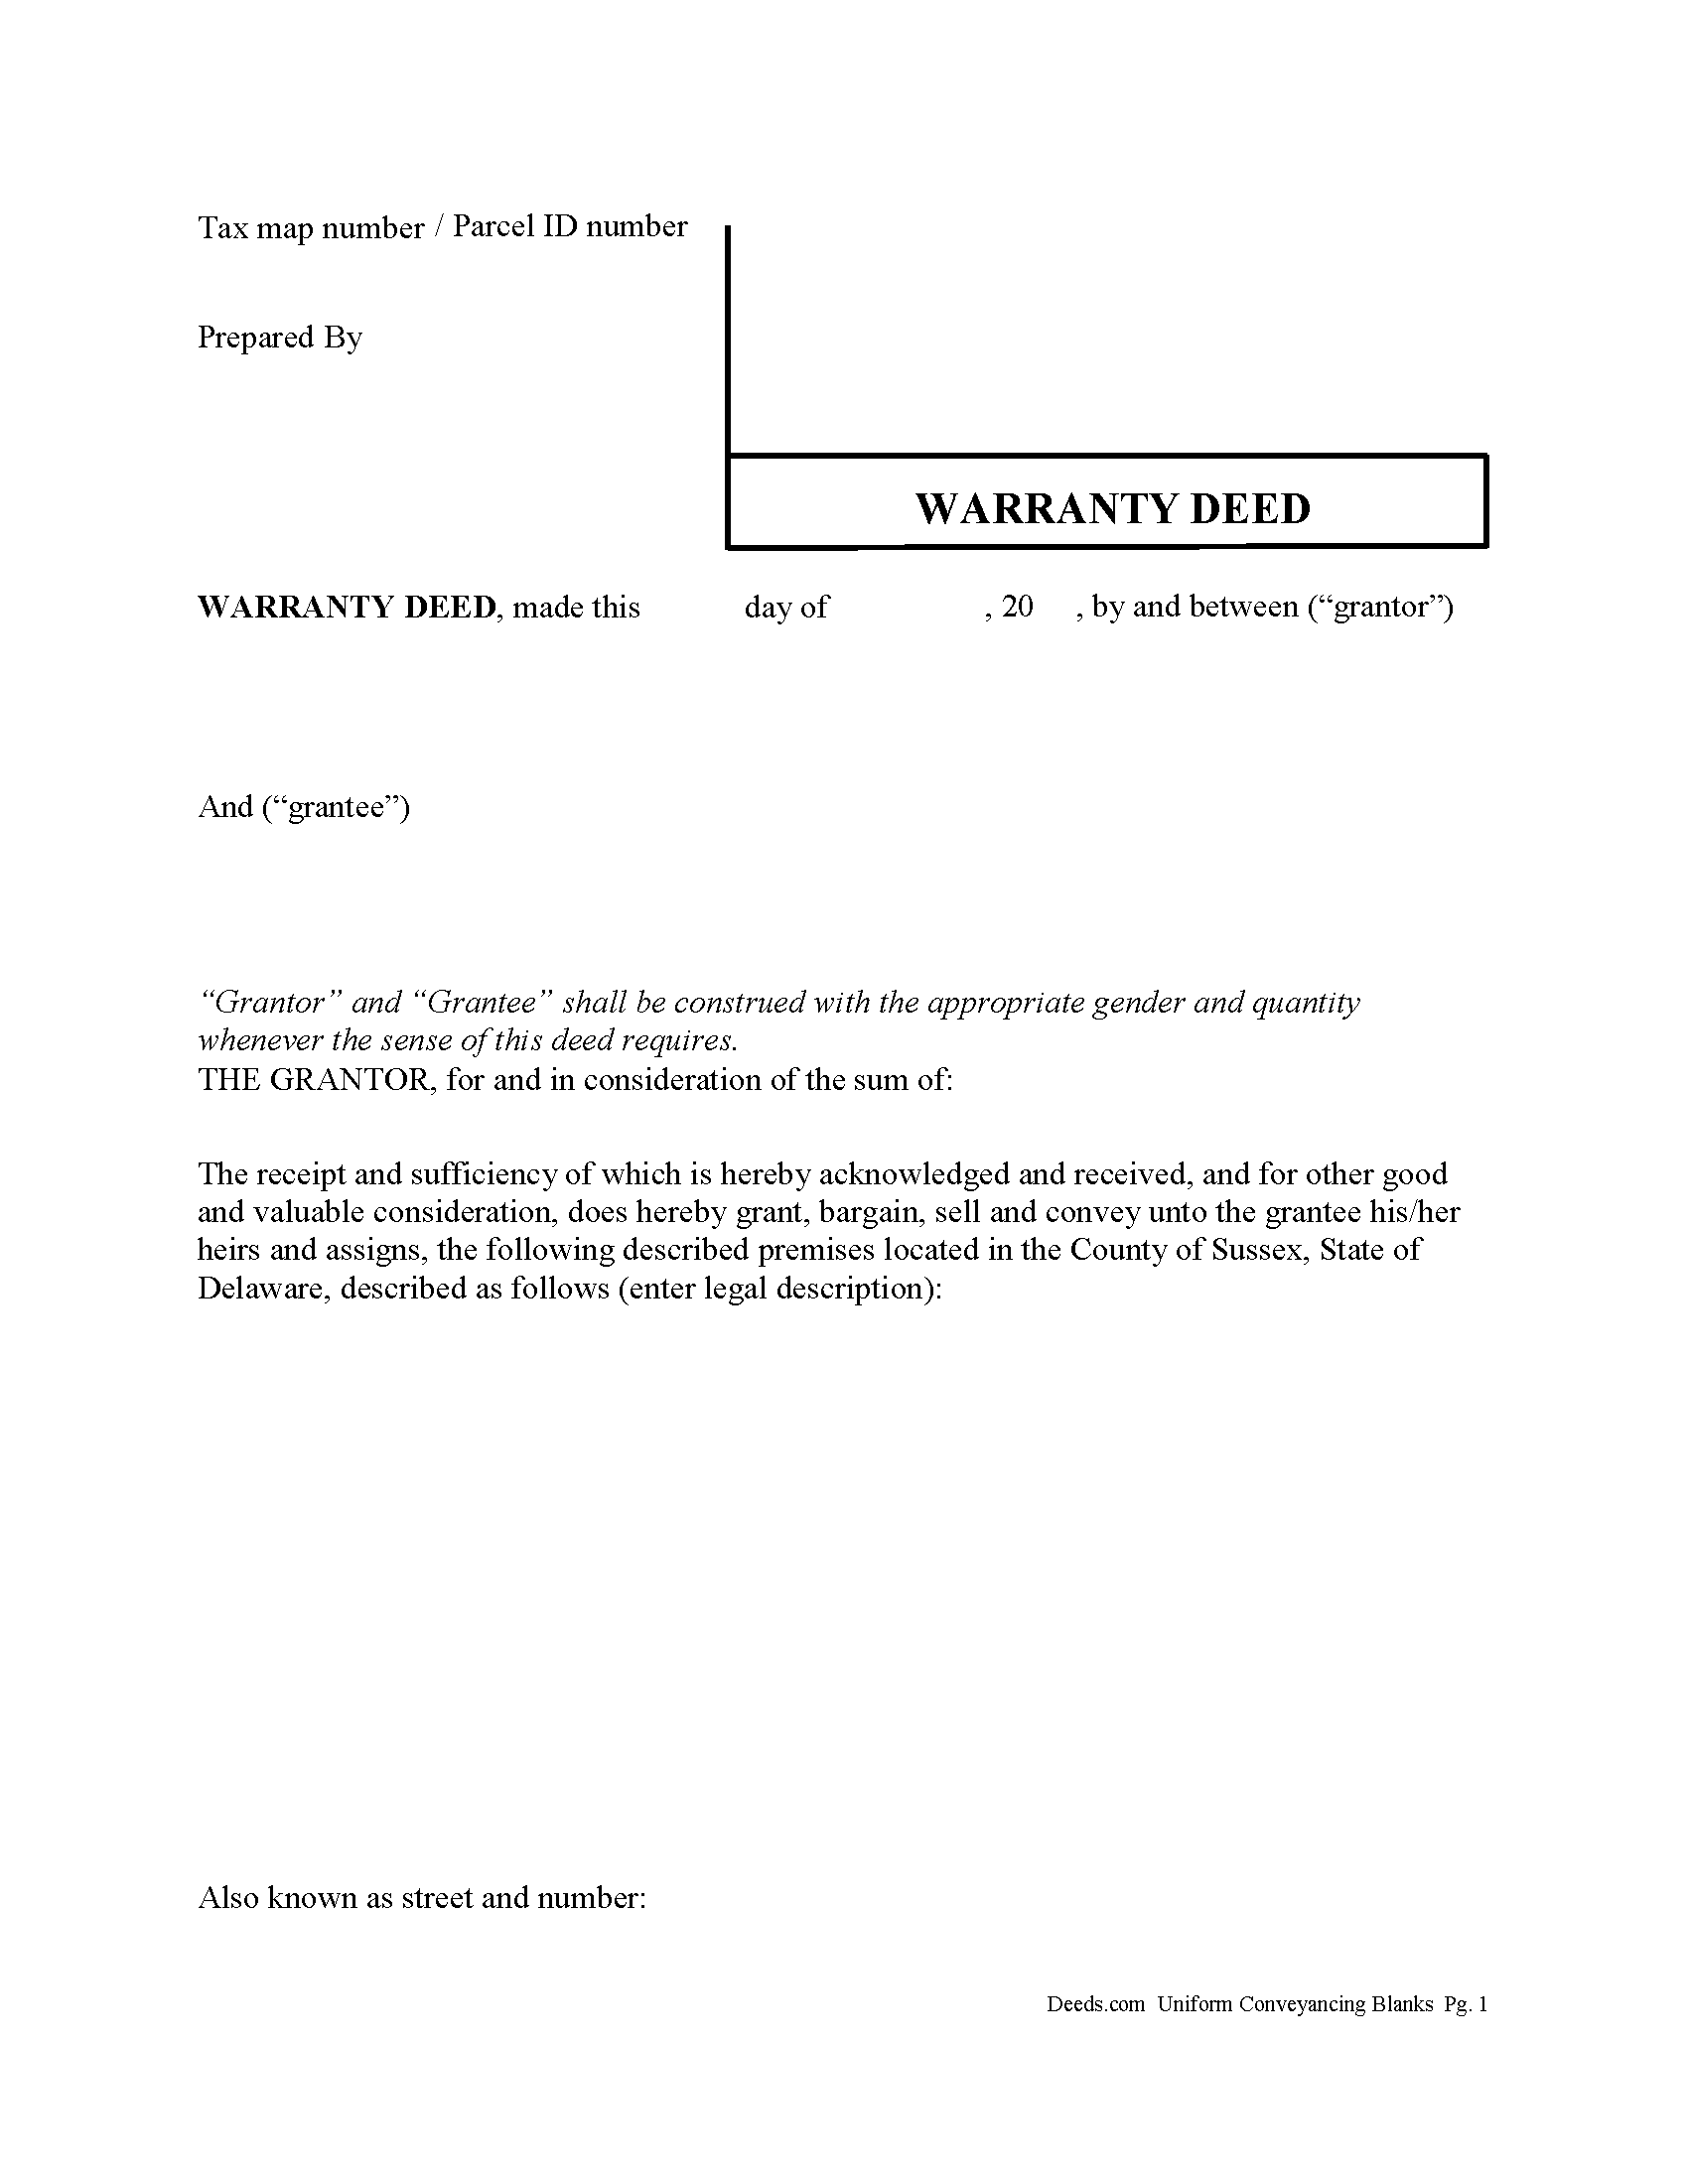 Sussex County Warranty Deed Form